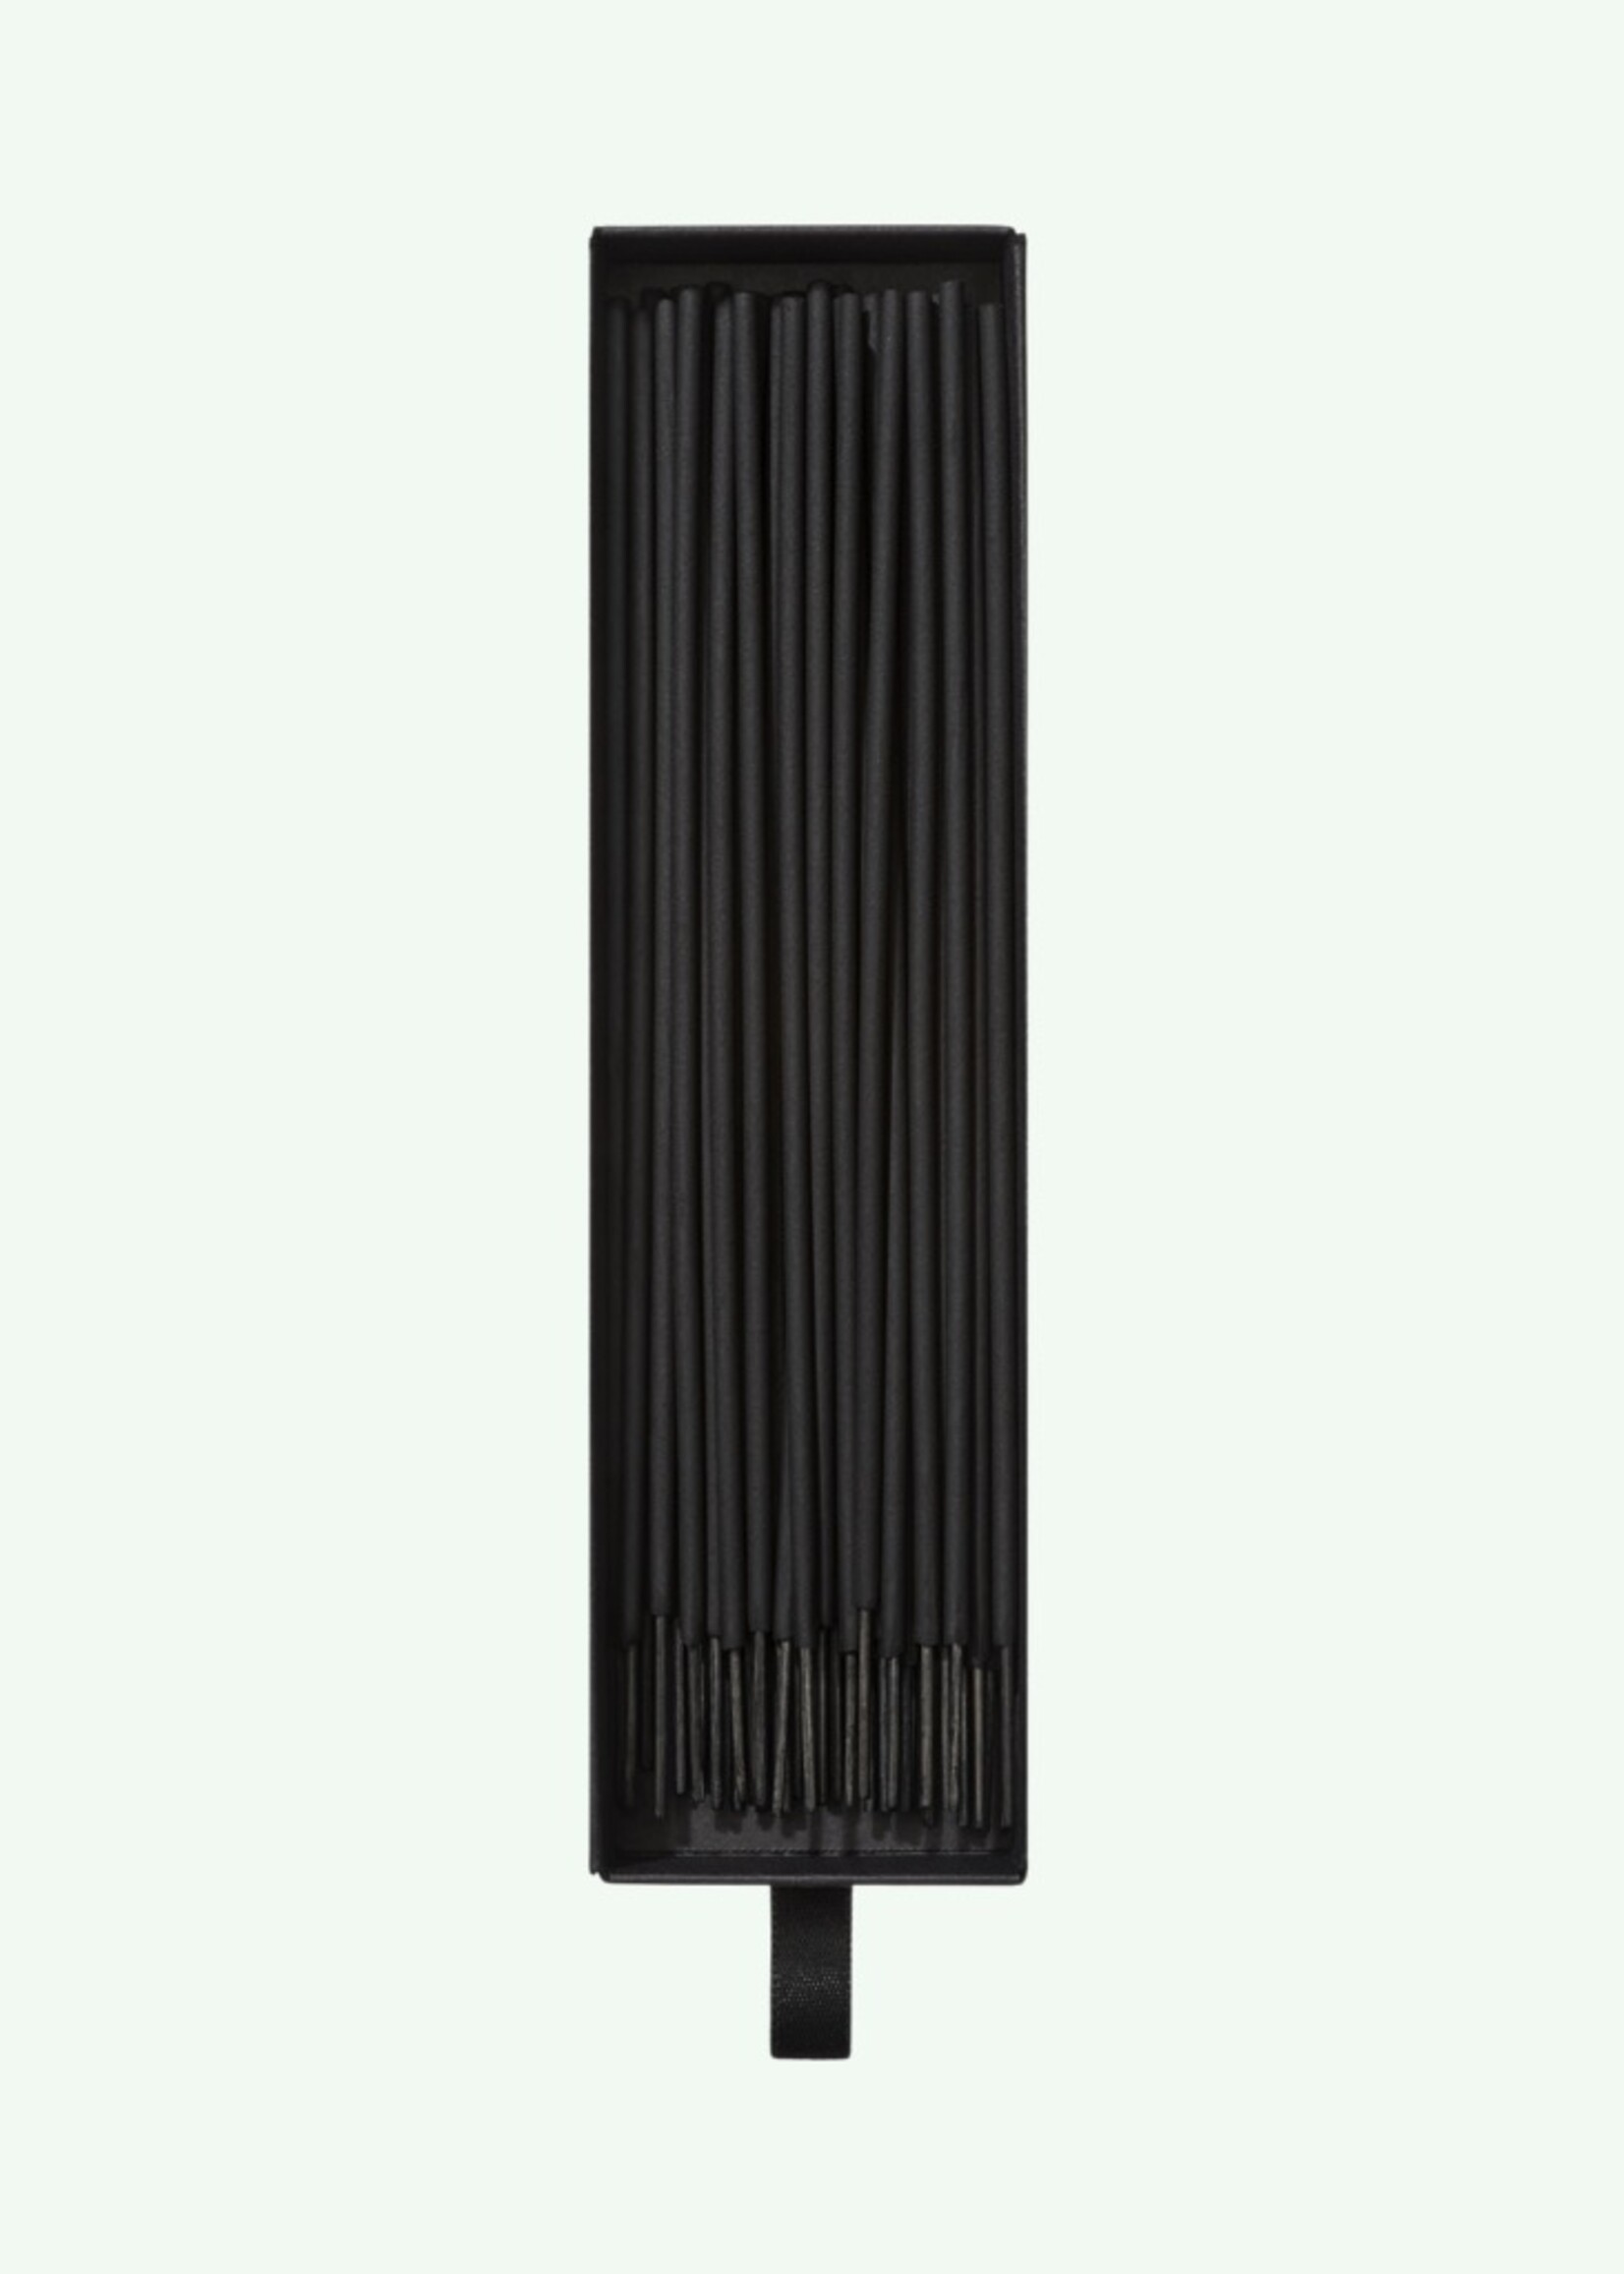 Pigmentarium Jericho Noir - 40 Incense sticks